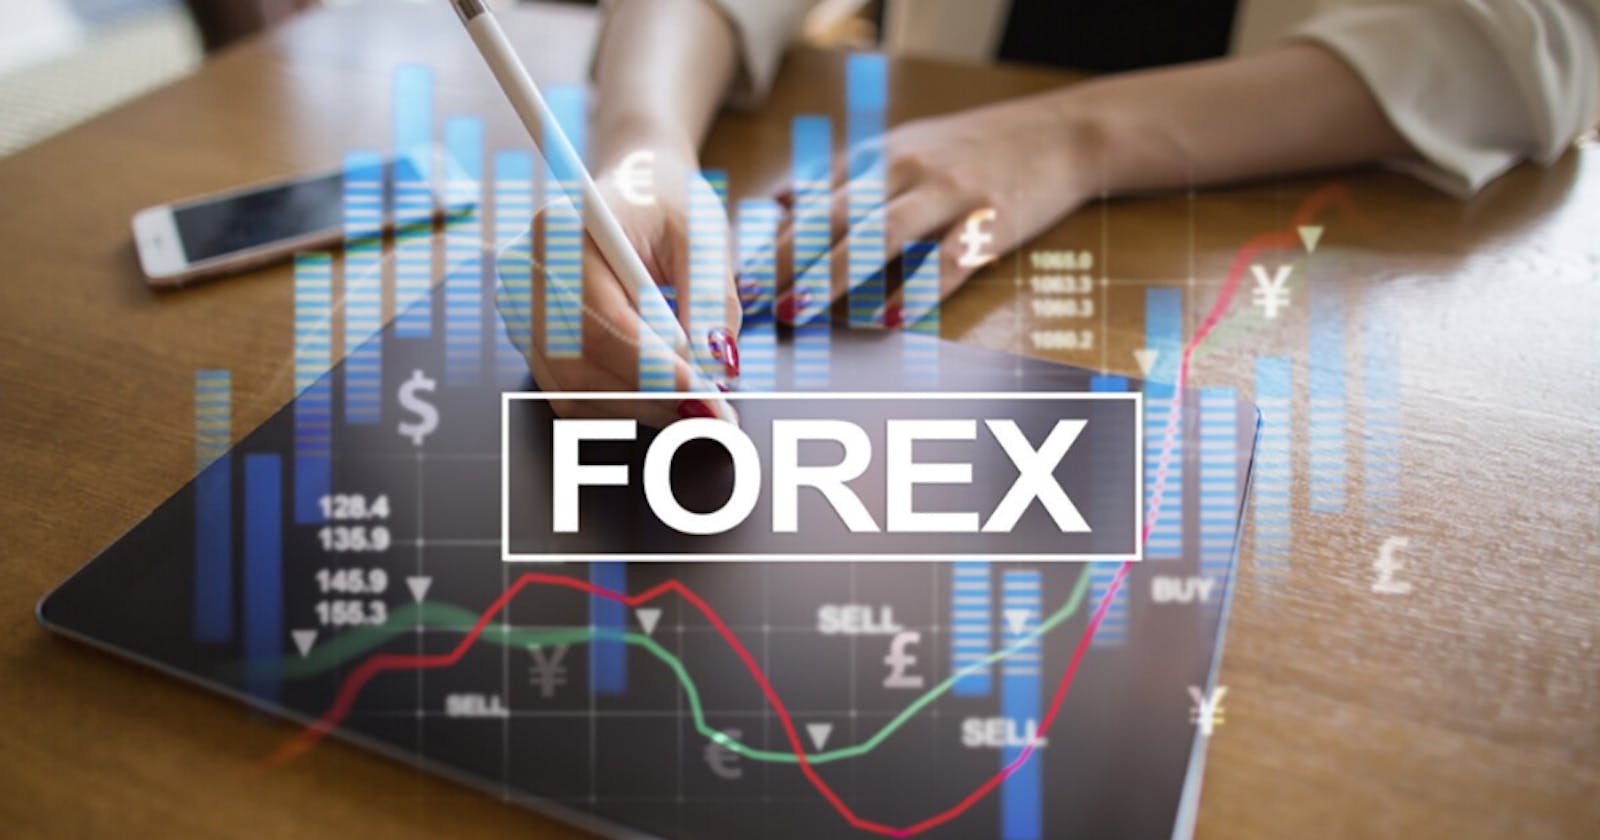 When do I go long or go short for forex trading?